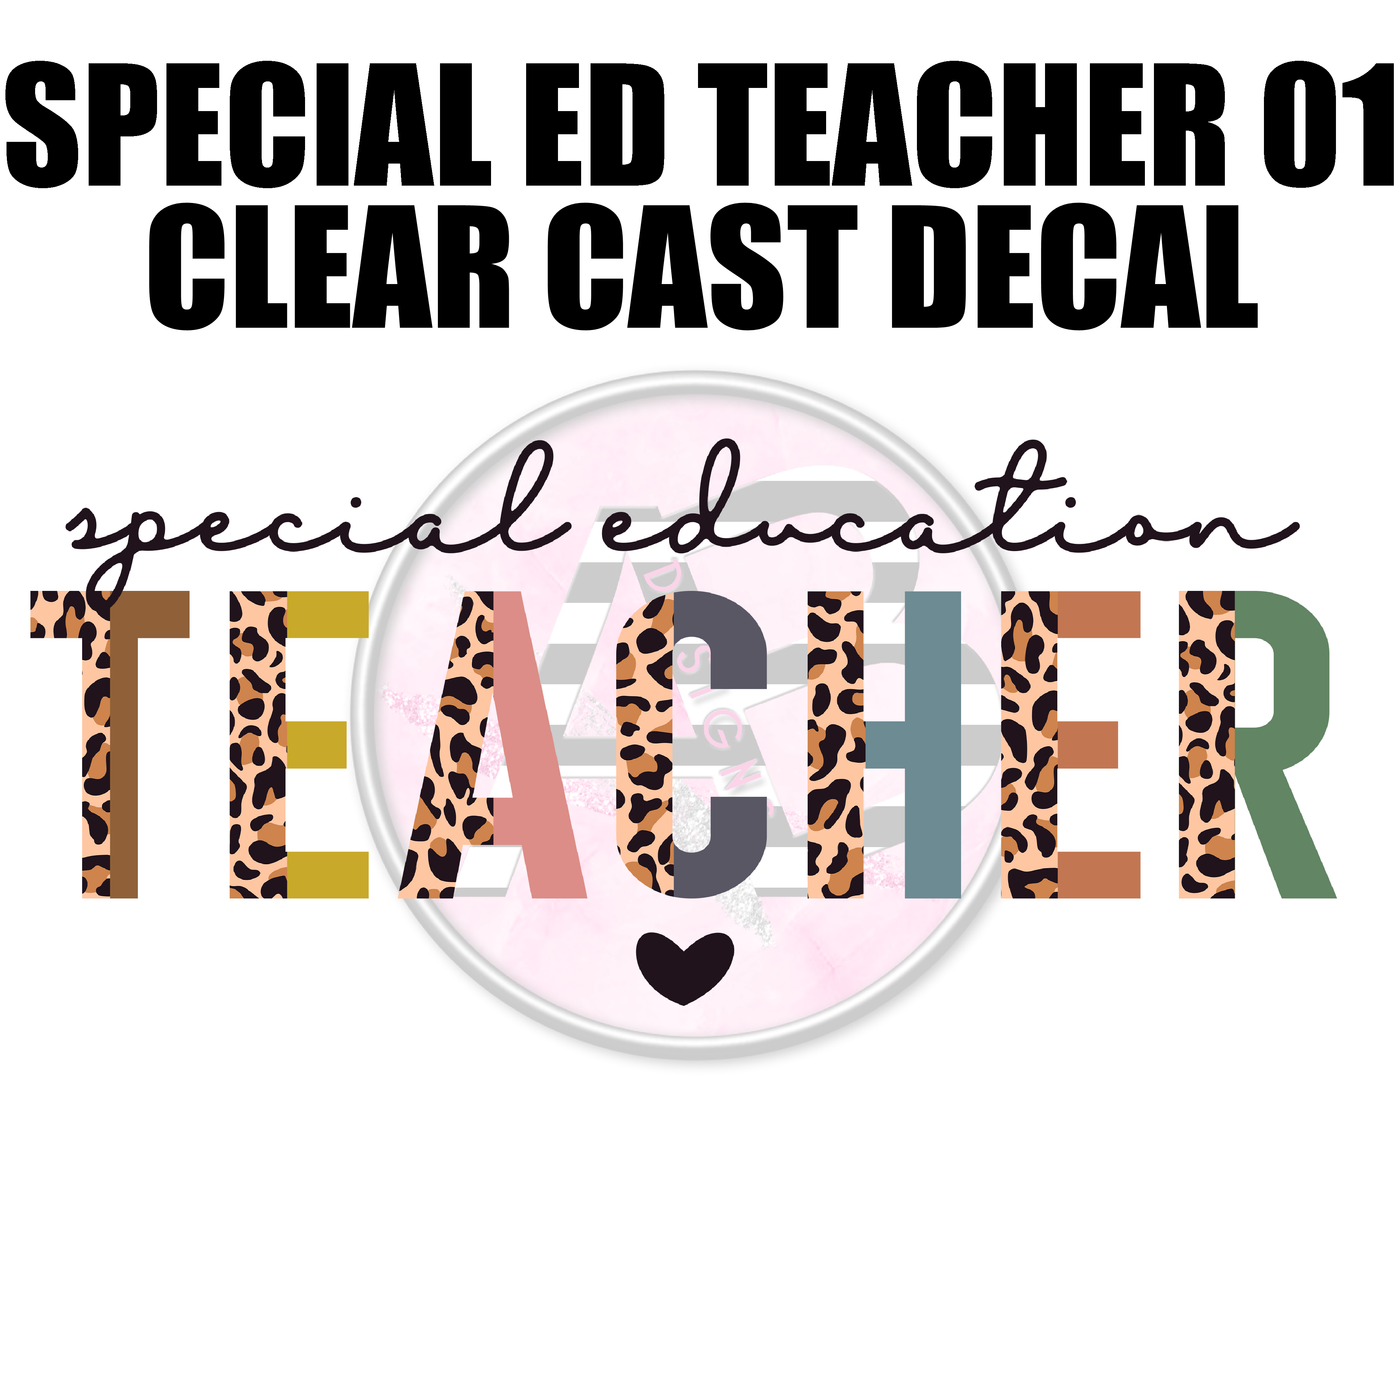 Special Education Teacher - Clear Cast Decal